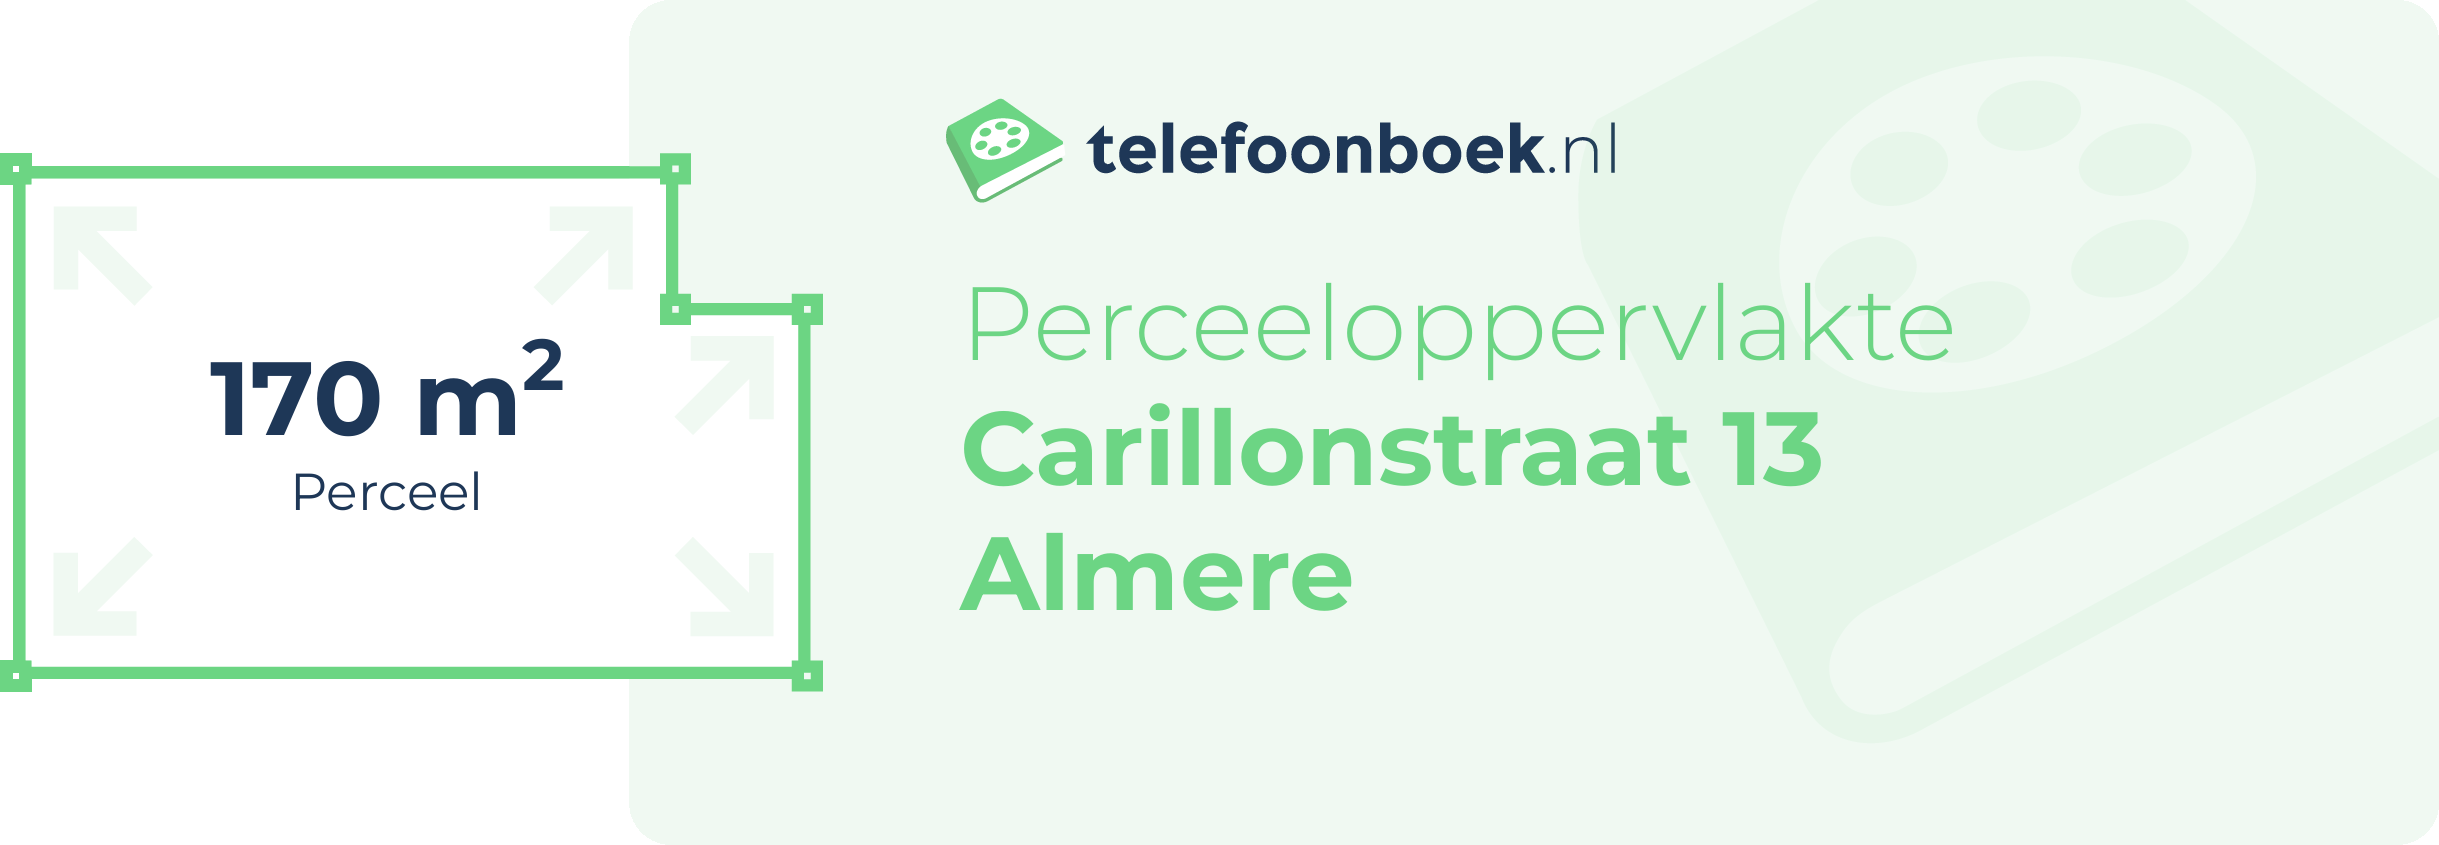 Perceeloppervlakte Carillonstraat 13 Almere